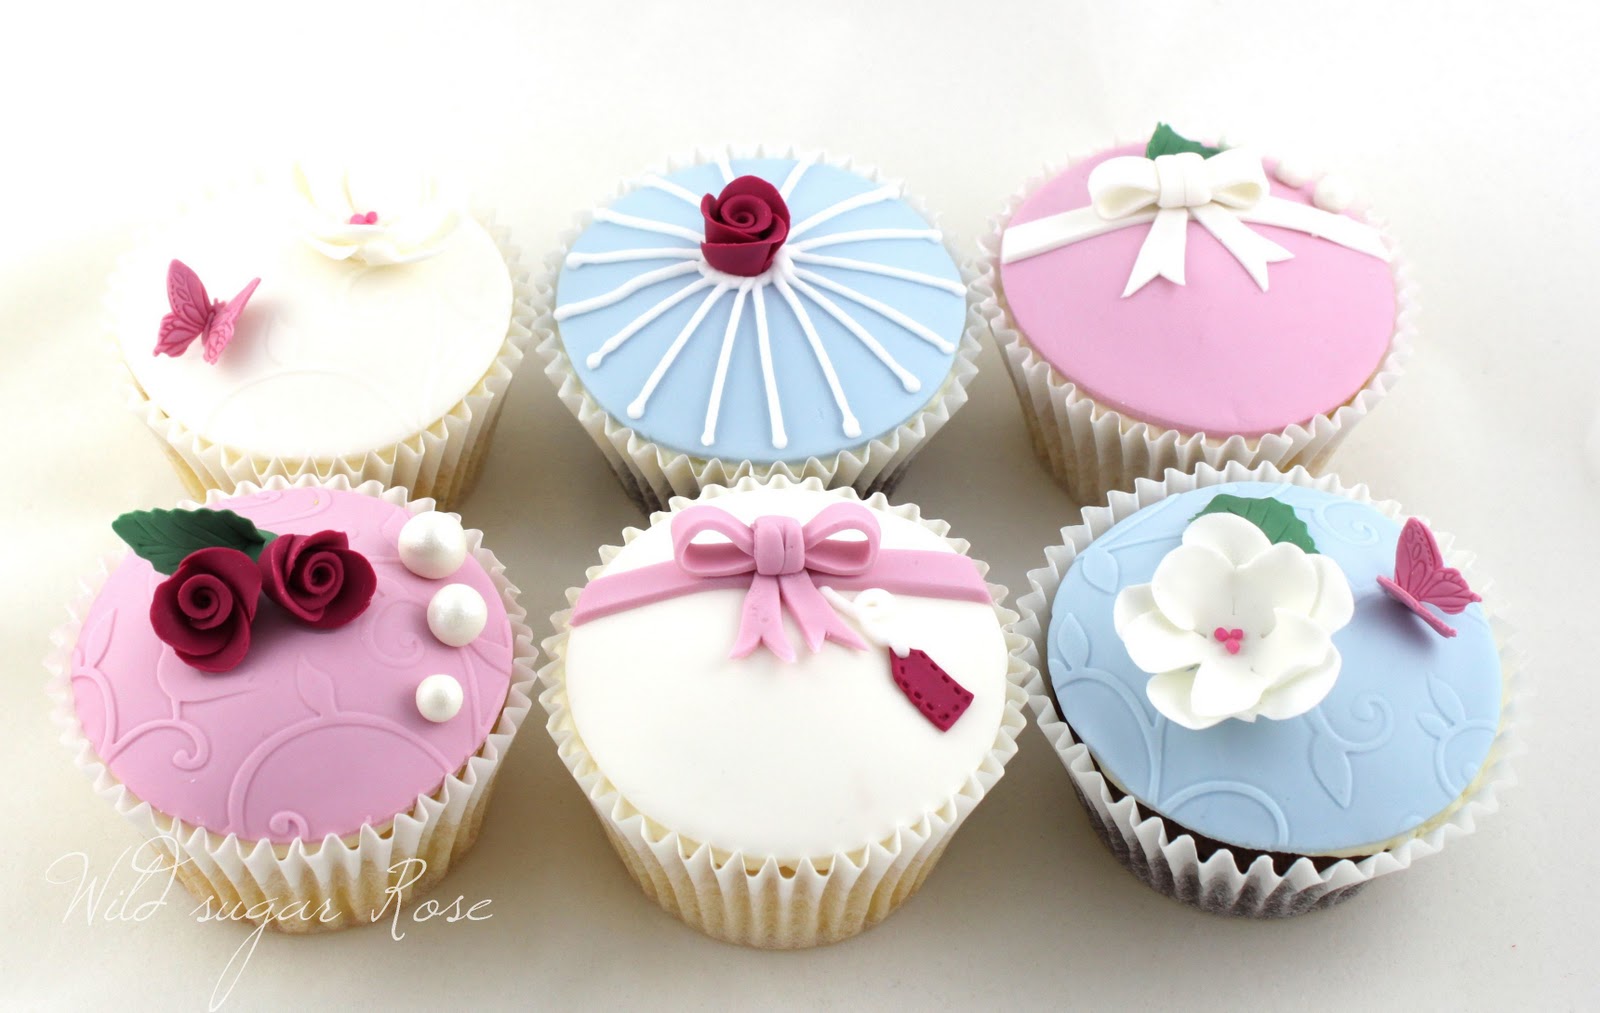 Wild sugar Rose - wedding cakes, cupcakes and cake ...